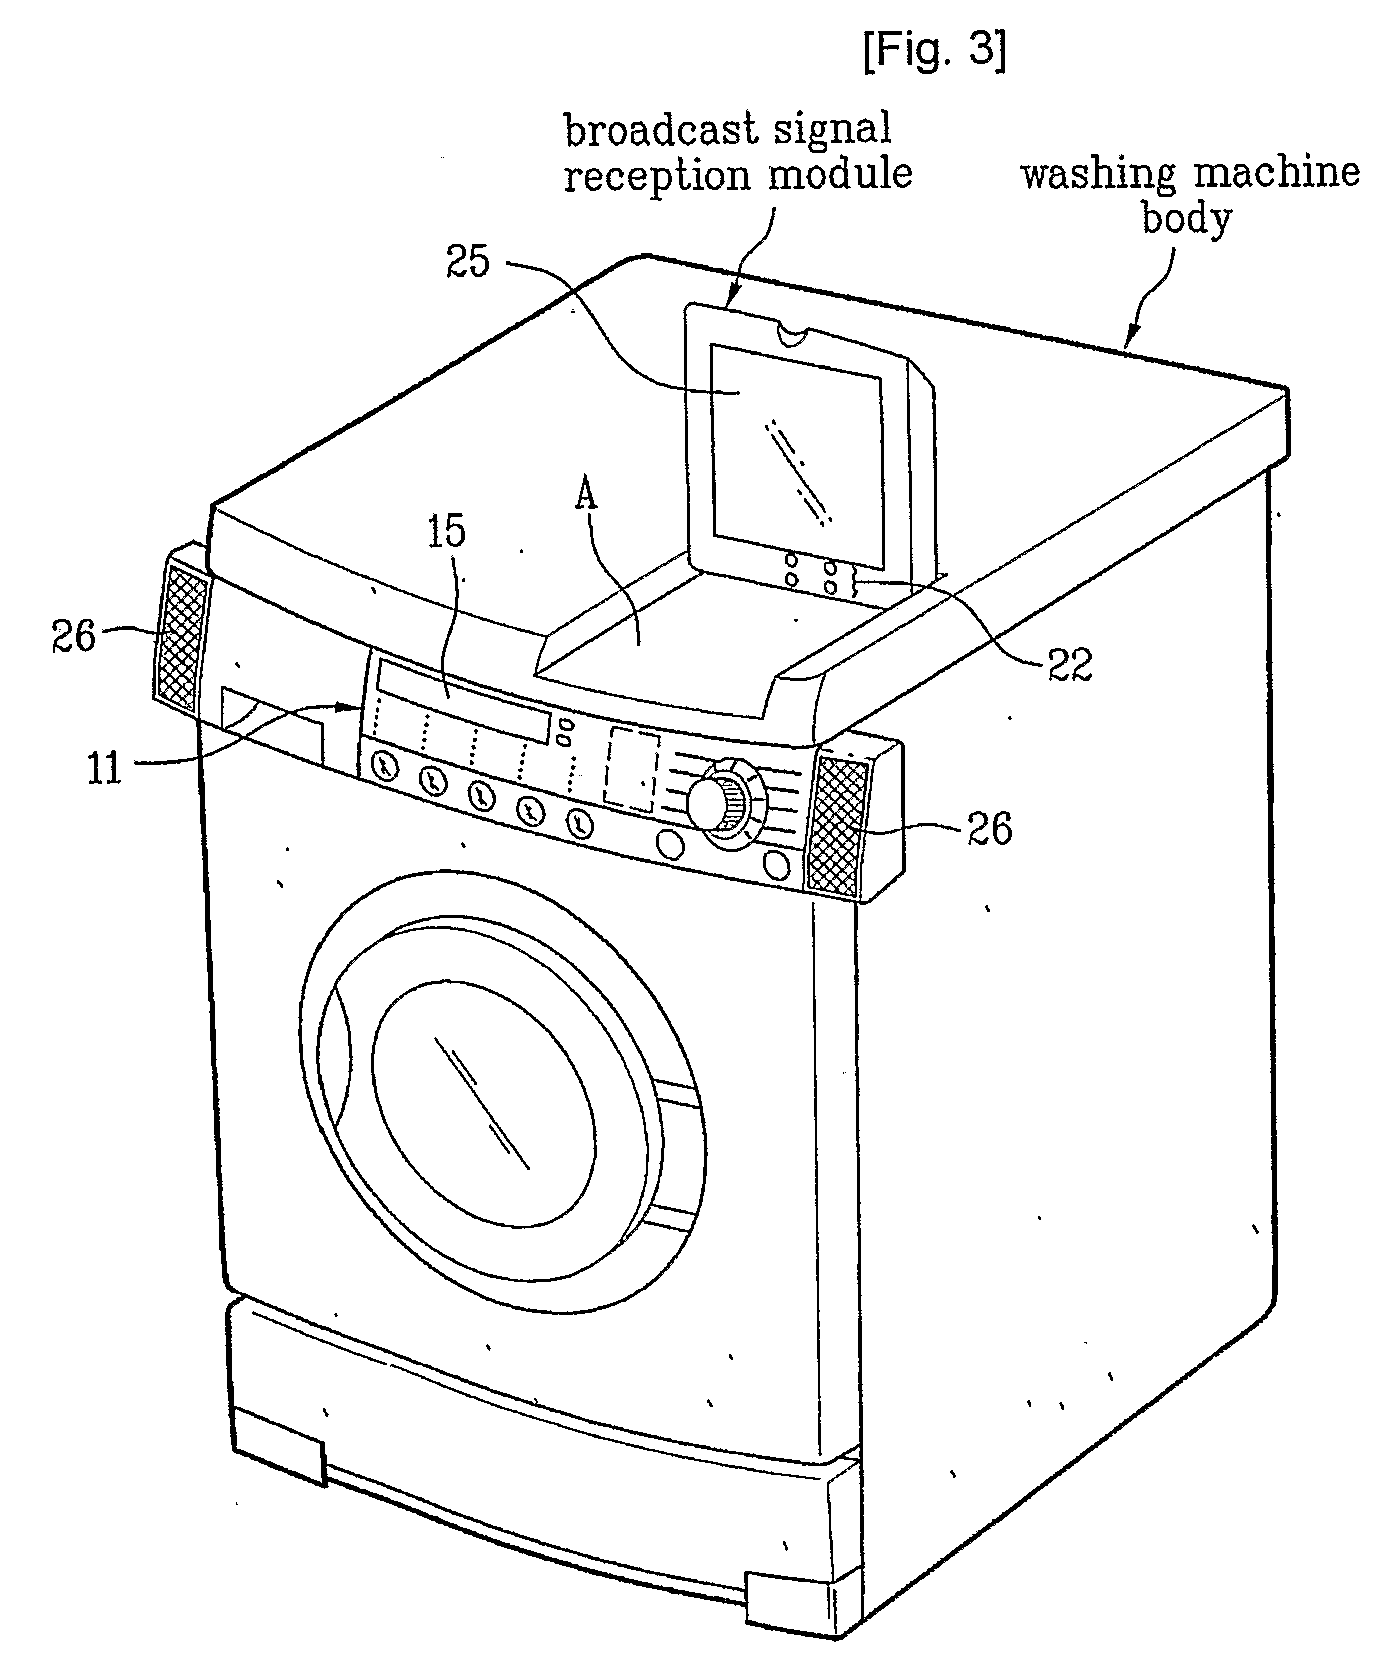 Washing Machine Having Broadcasting Receiver